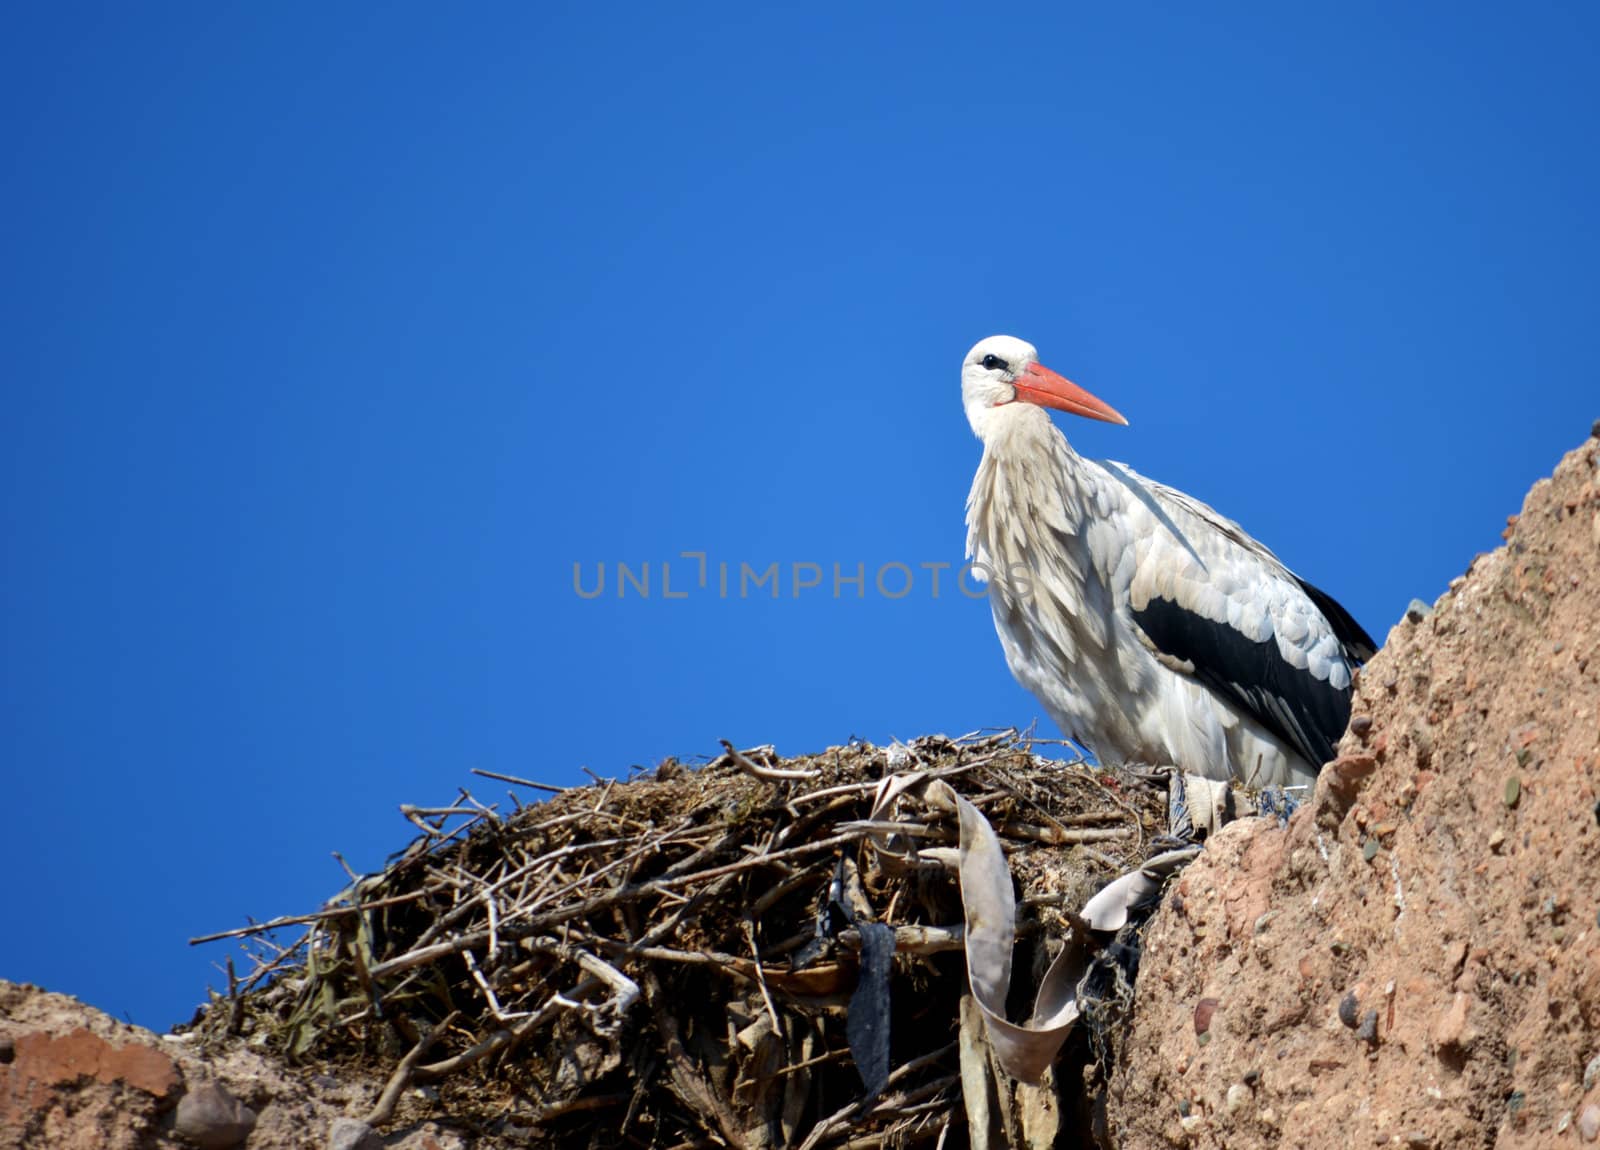 Stork in its nest under blue sky by artofphoto